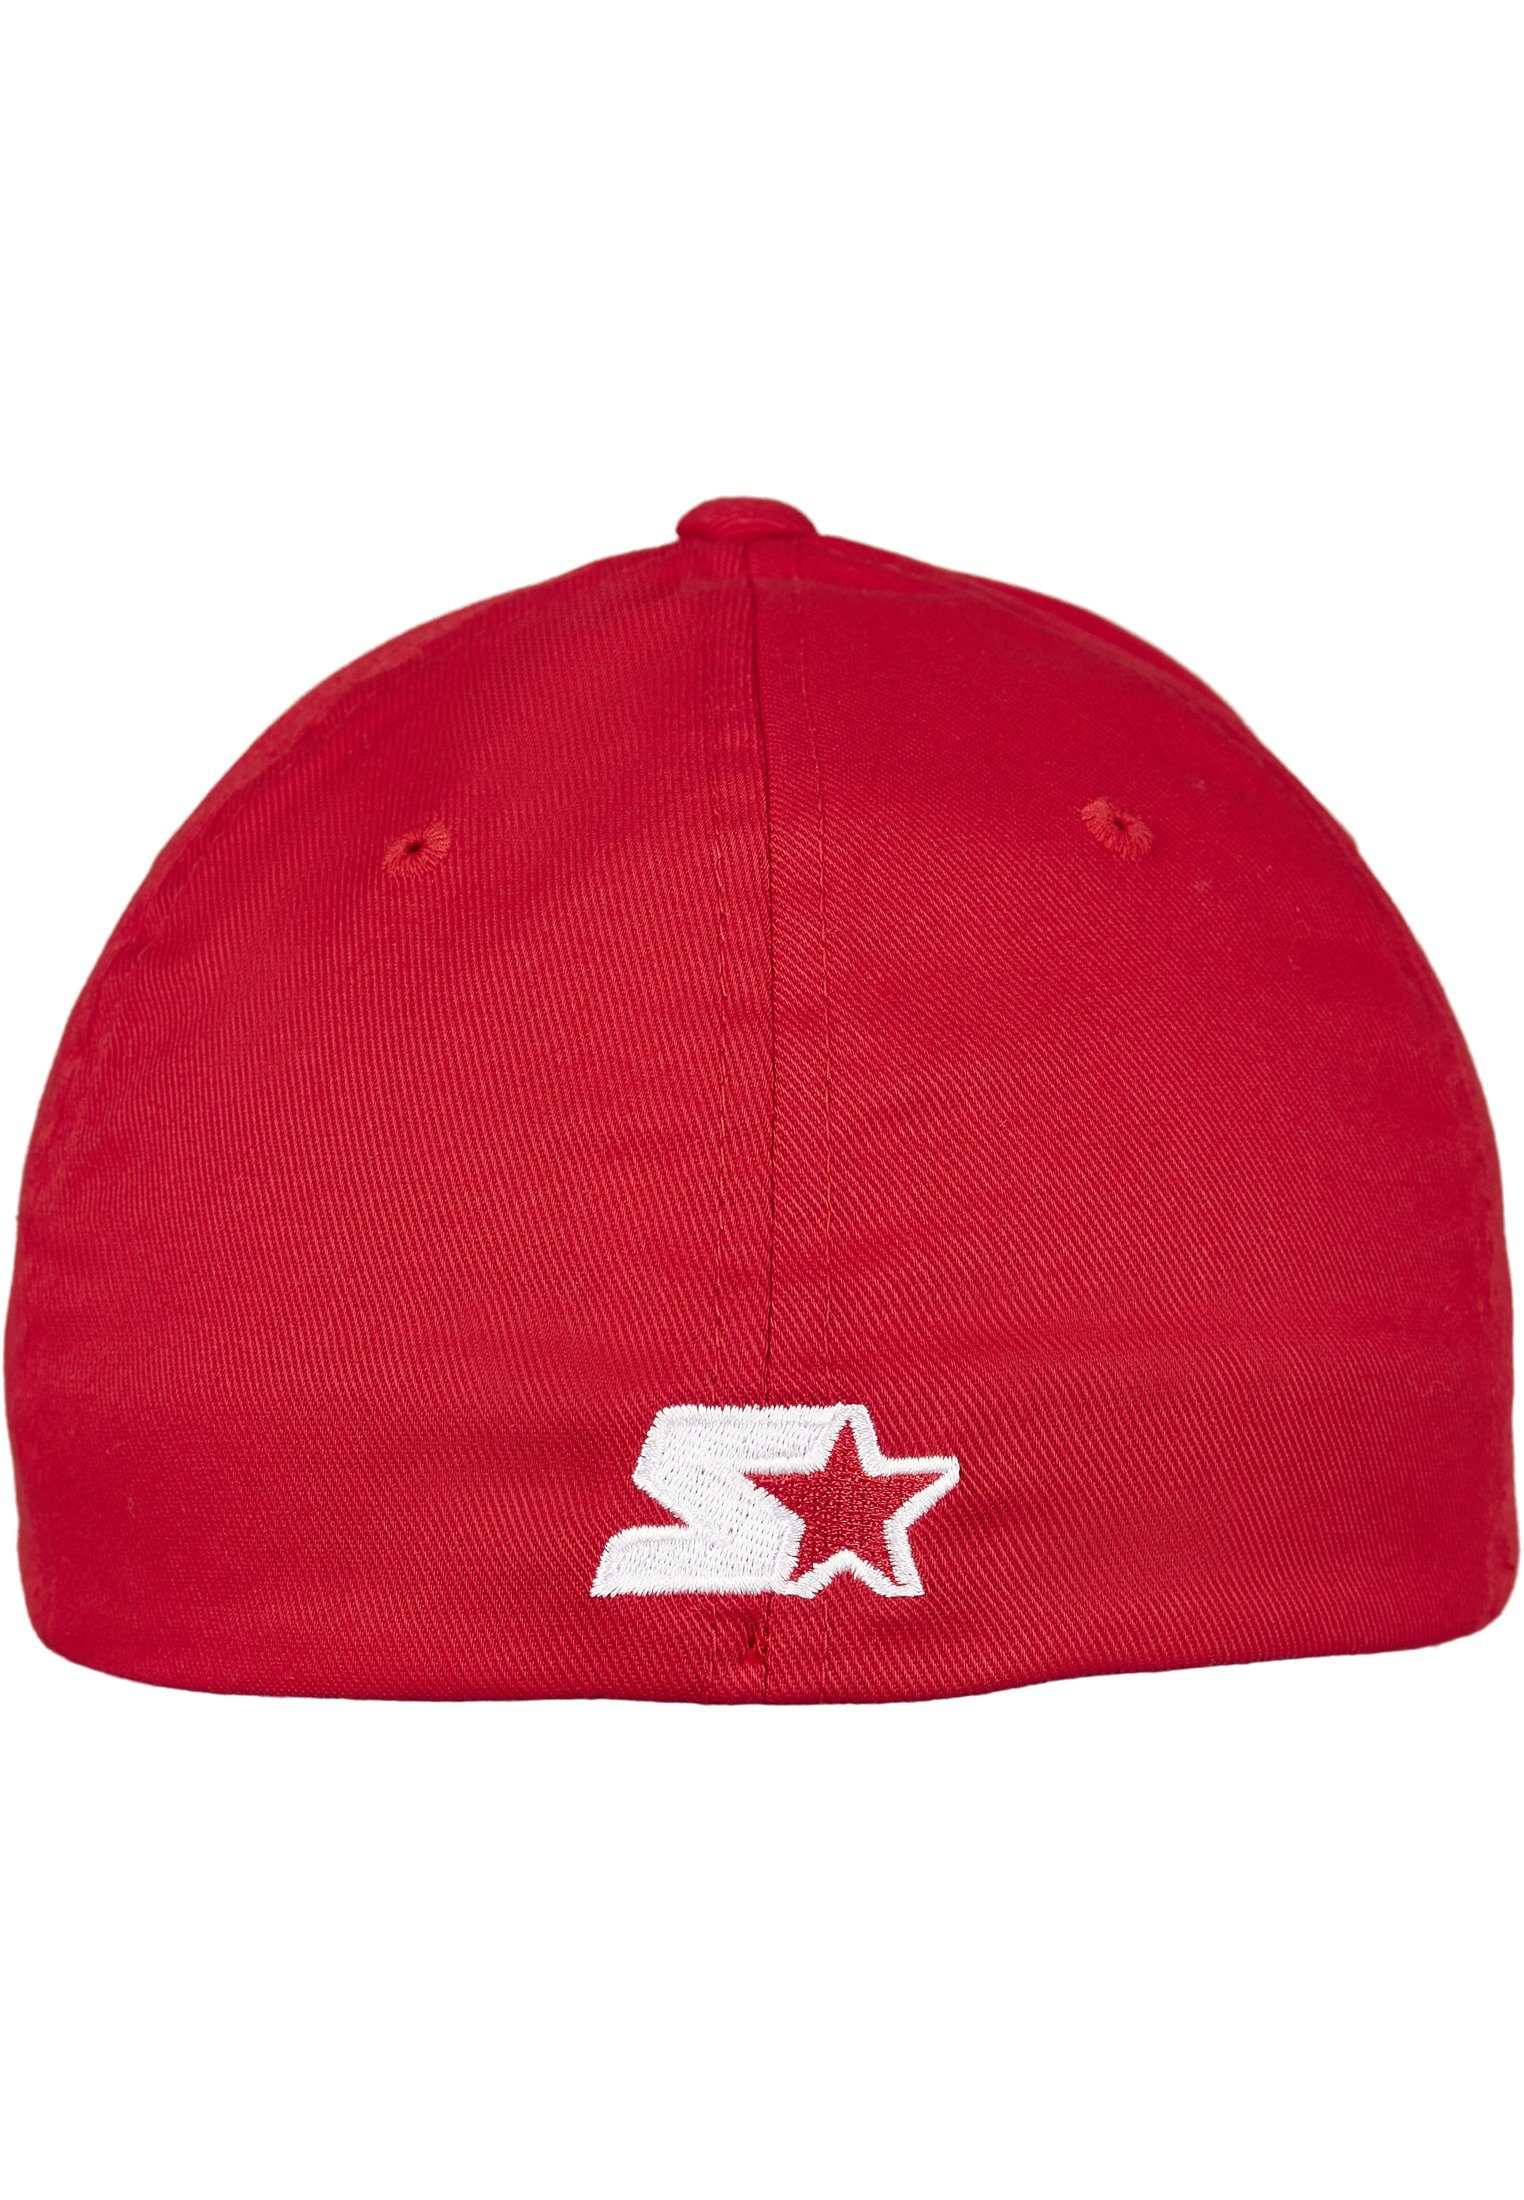 Black Cap Starter Chicago red Herren Label Starter Flex Flexfit Cap